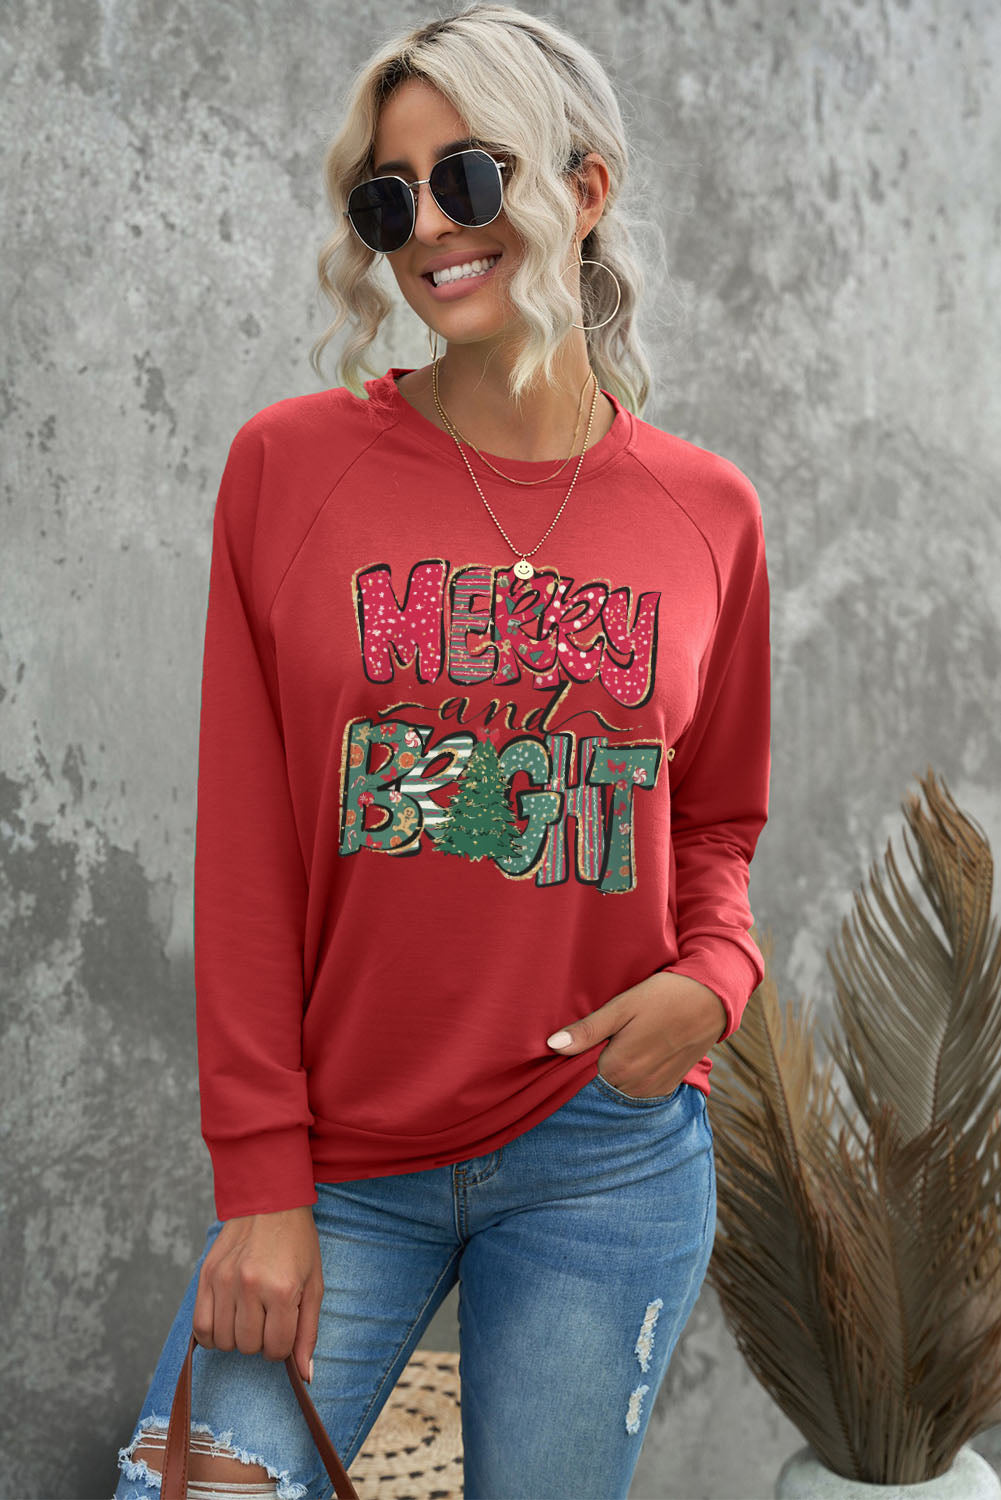 MERRY and BRIGHT Xmas Tree Print Sweatshirt